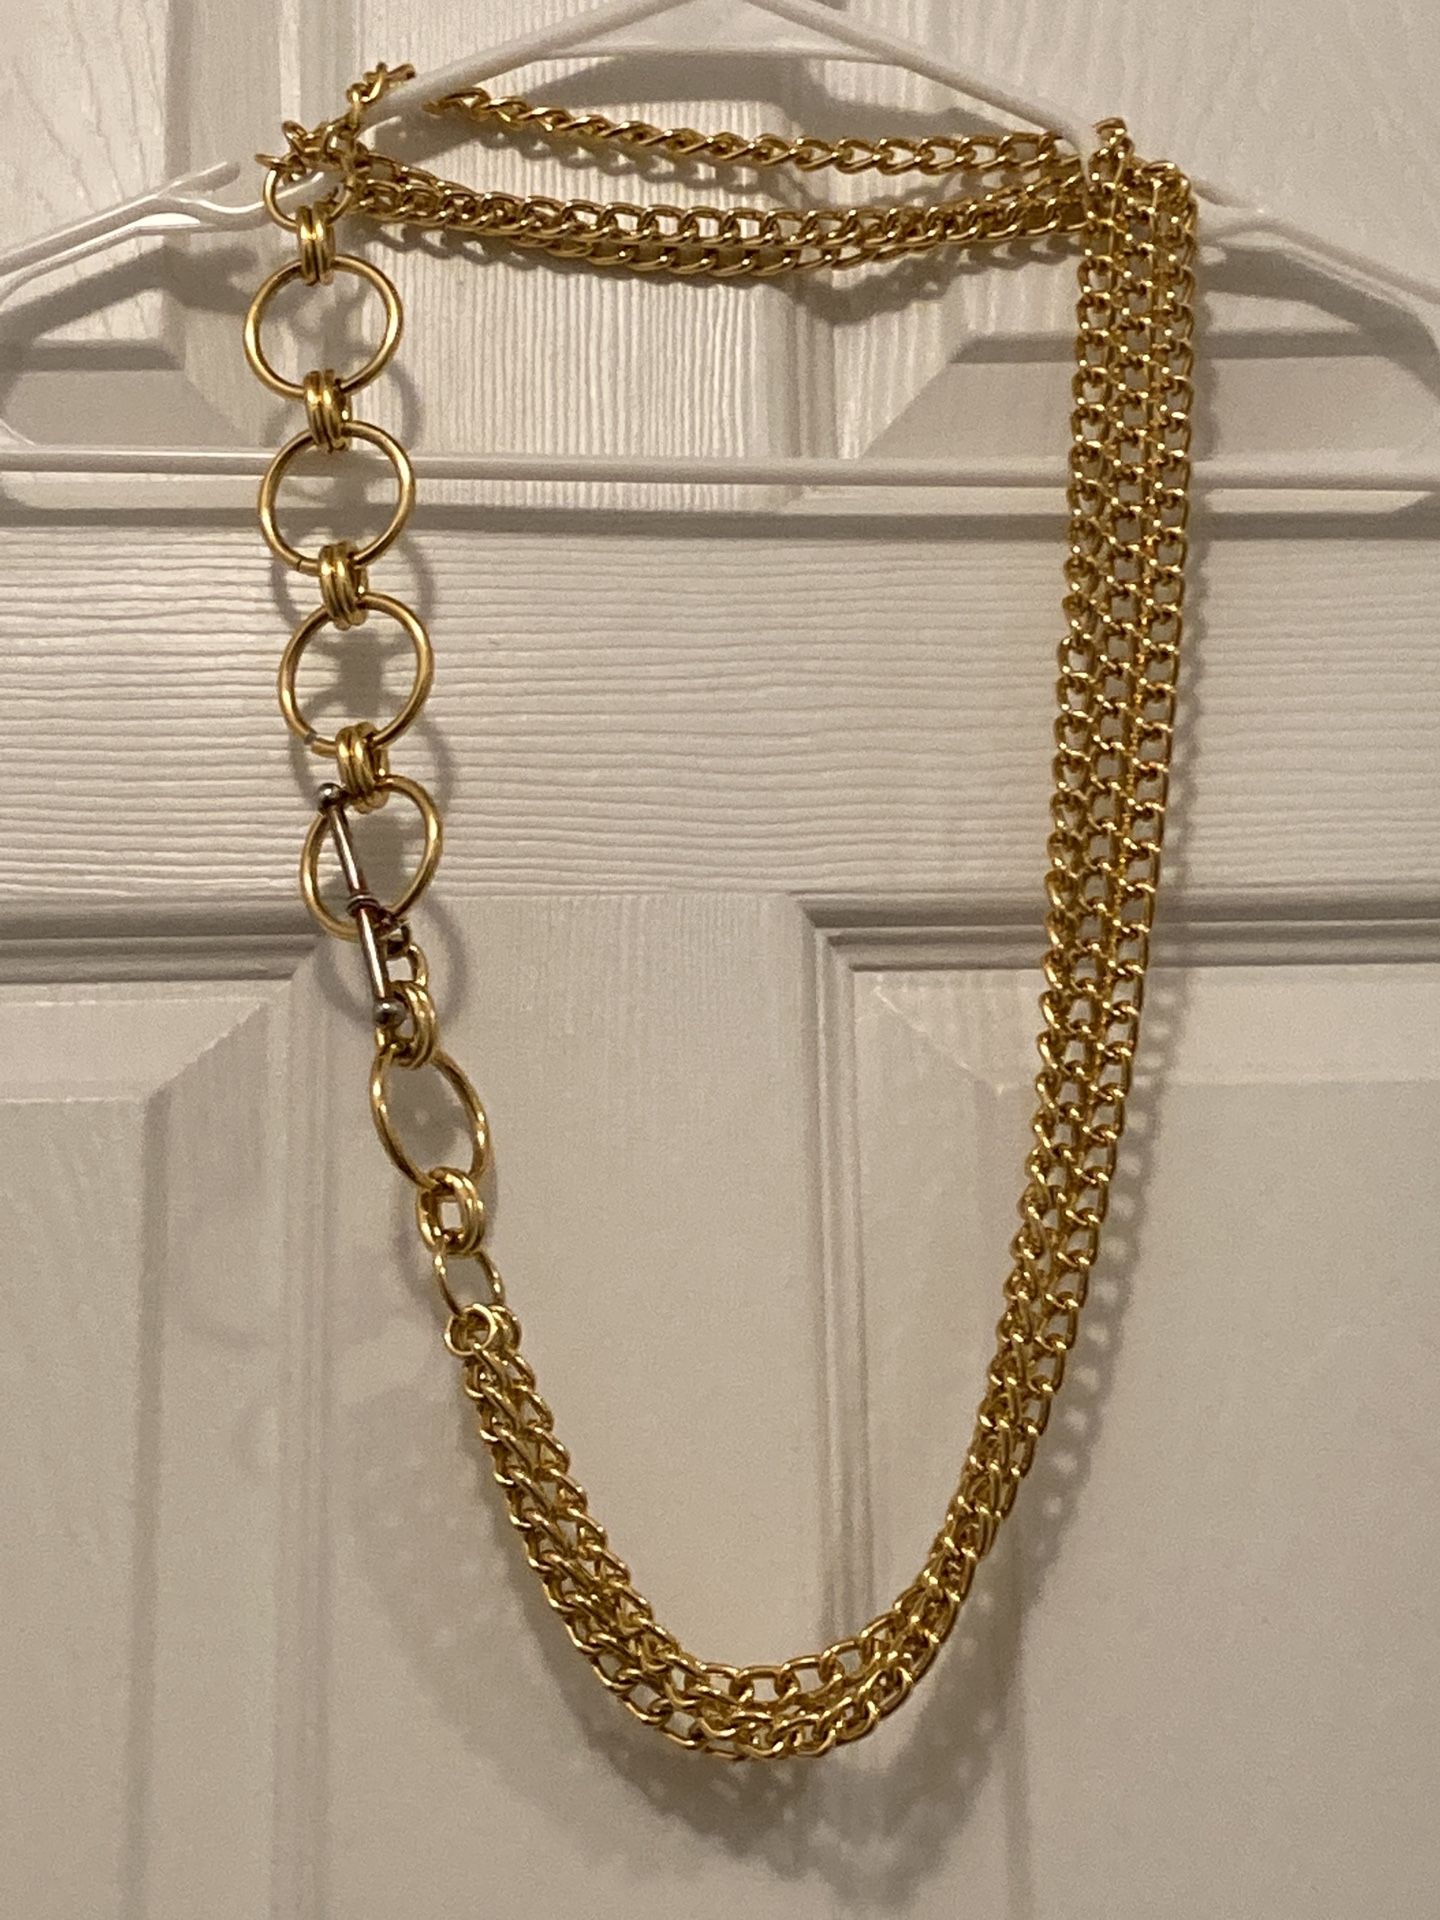 Adjustable Gold Chain Belt